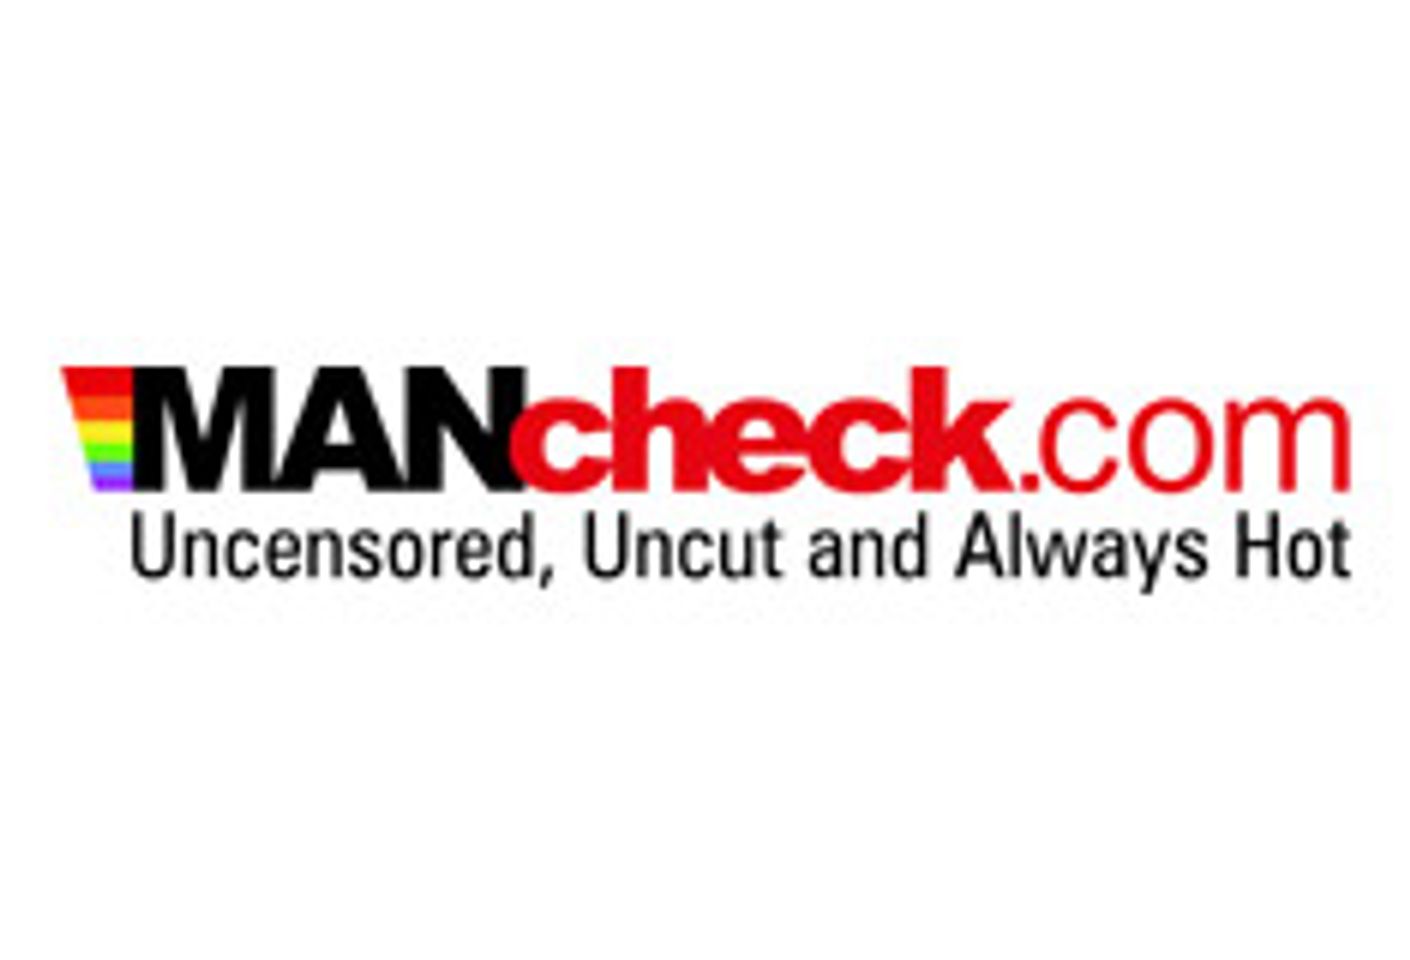 Company Profile: MANcheck.com